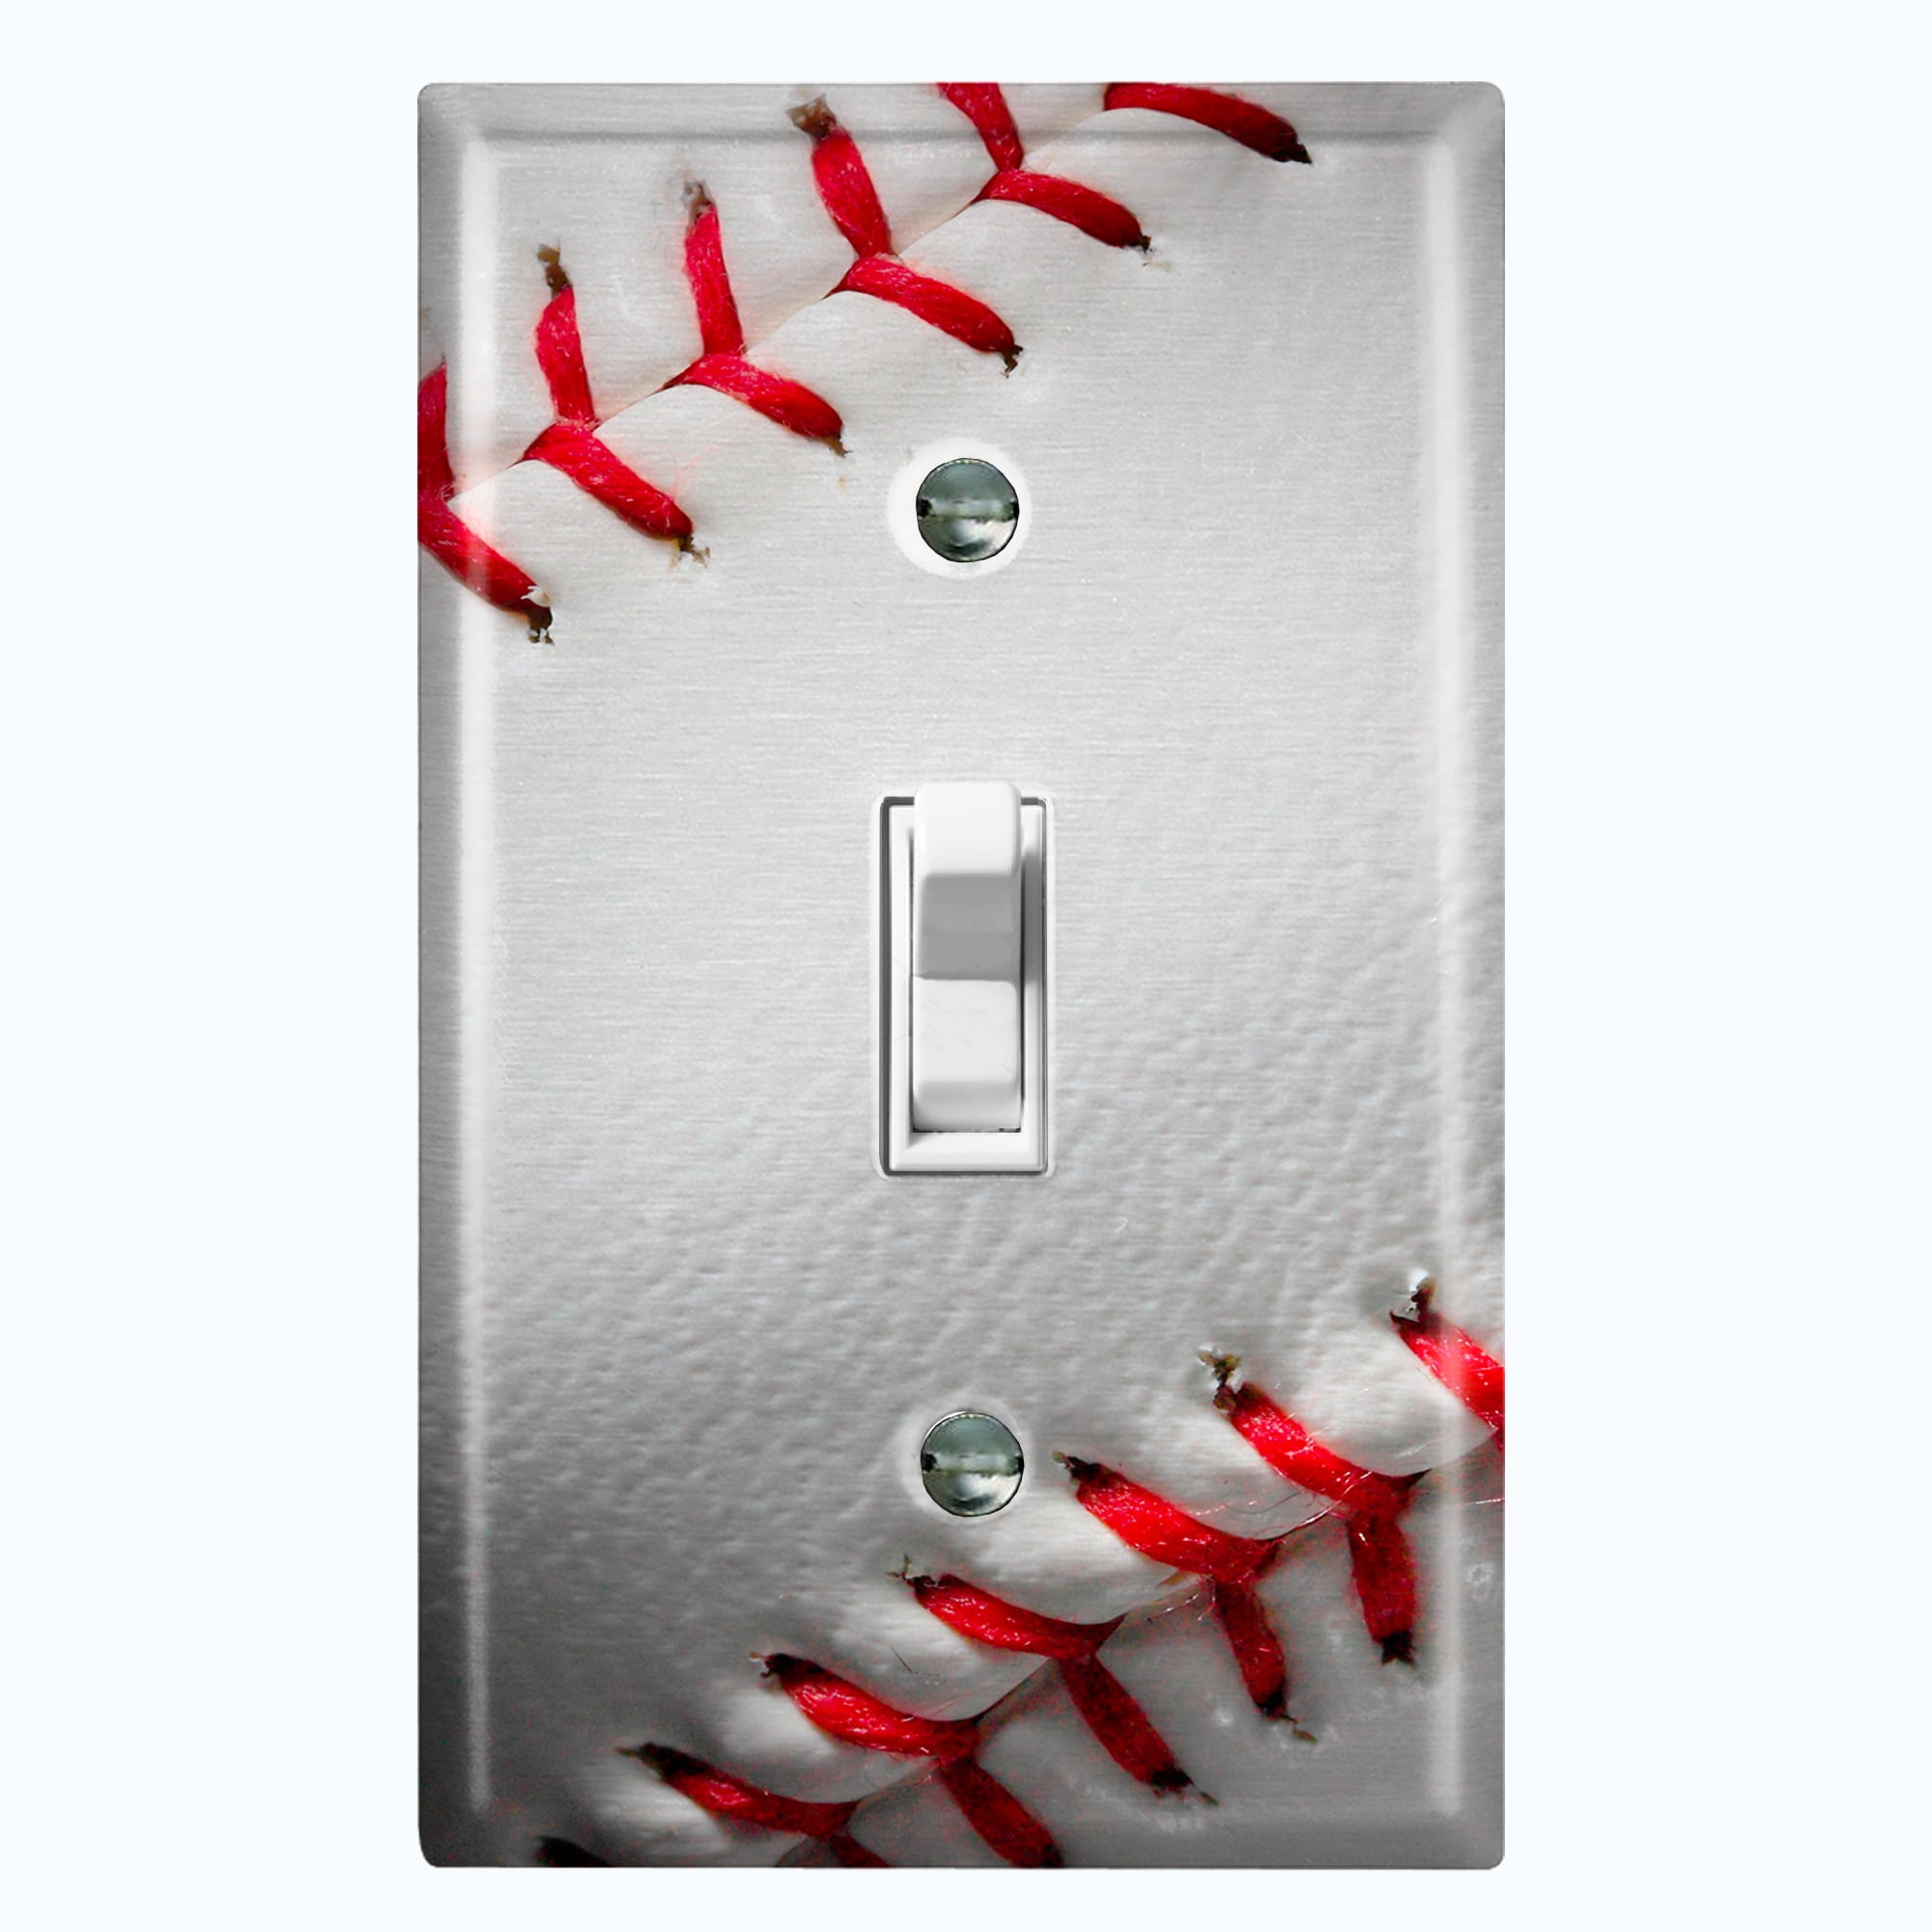 Baseballs Baseballs and More Baseballs Light Switch Wall Plate Cover #BB02 